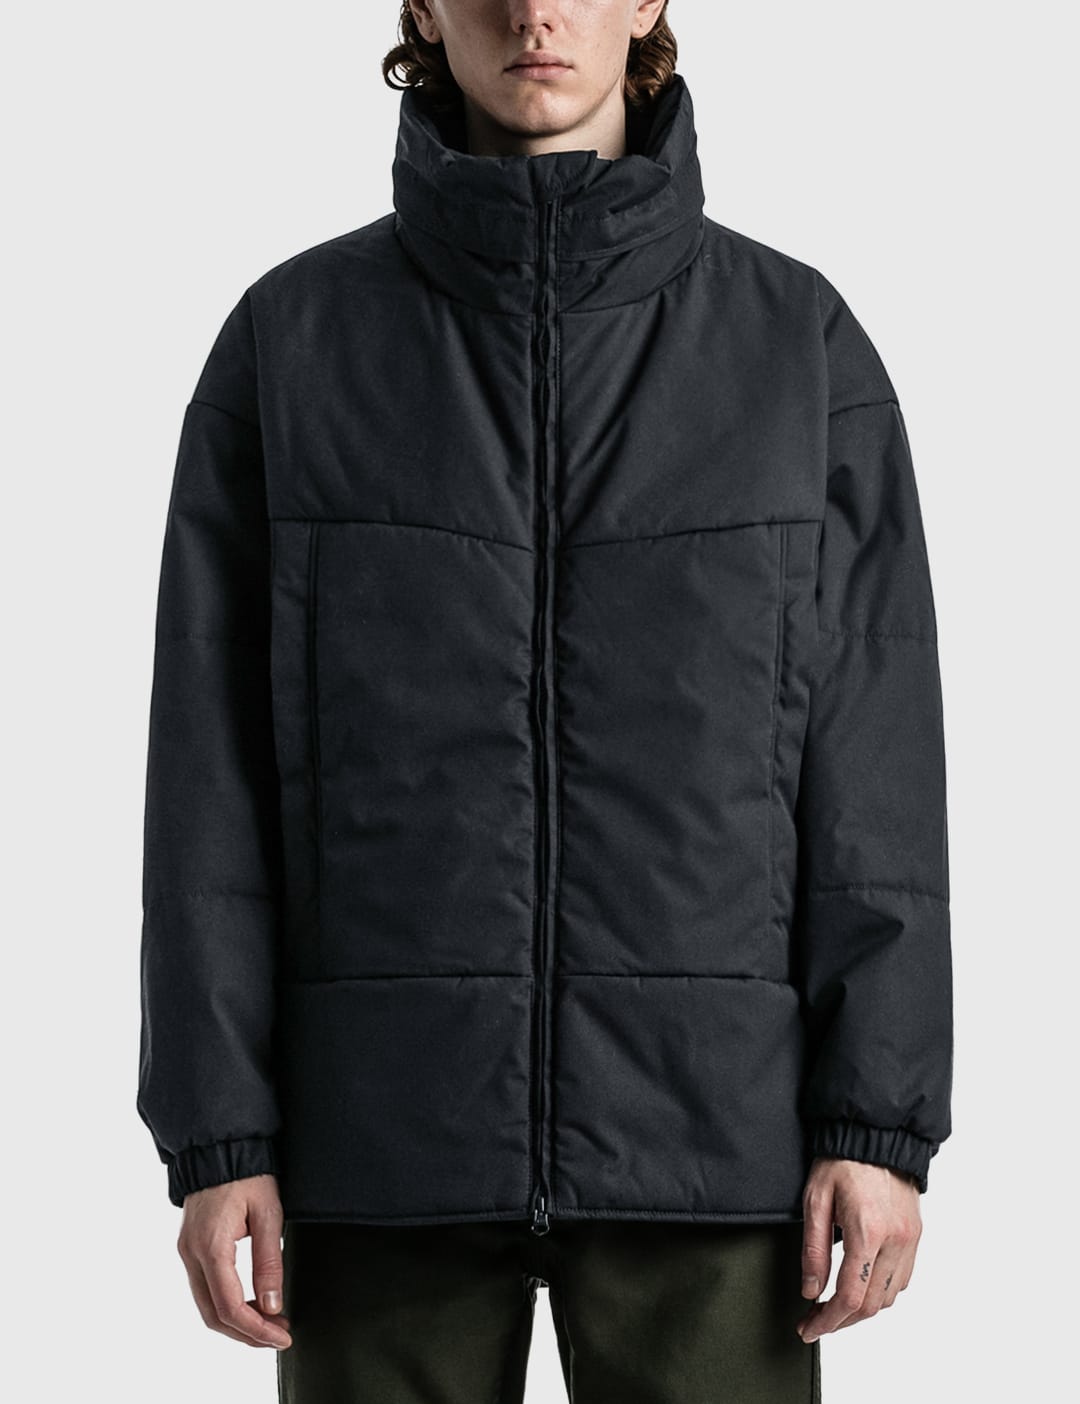 Nanamica - Field Jacket | HBX - HYPEBEAST 為您搜羅全球潮流時尚品牌